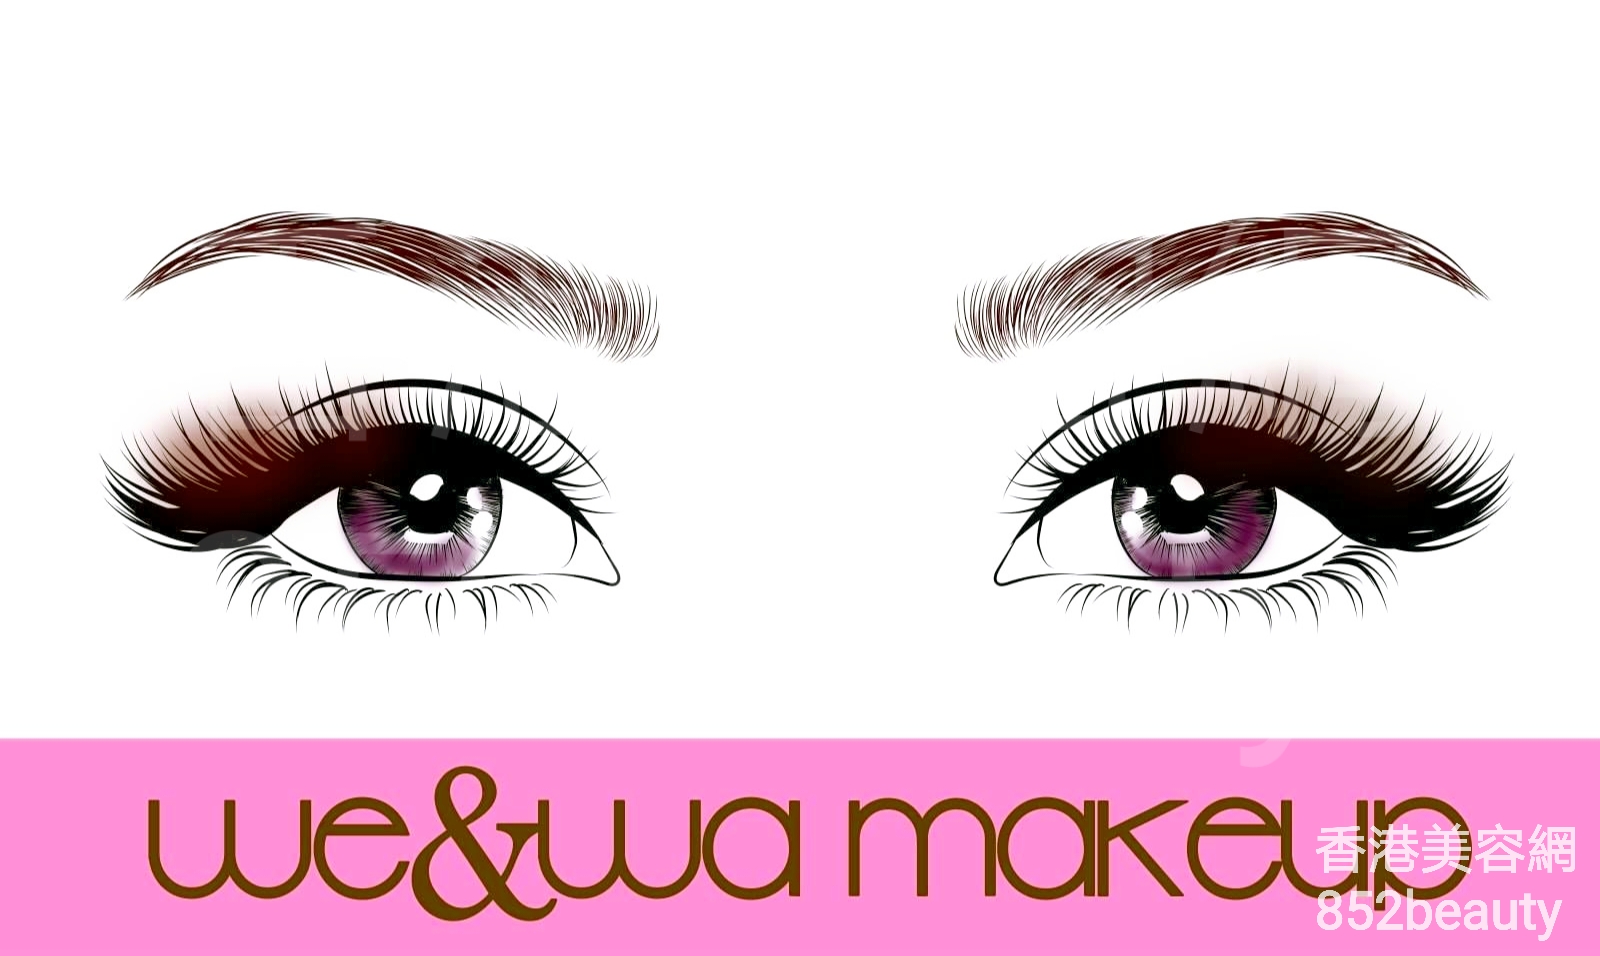 香港美容網 Hong Kong Beauty Salon 美容院 / 美容師: we & wa makeup